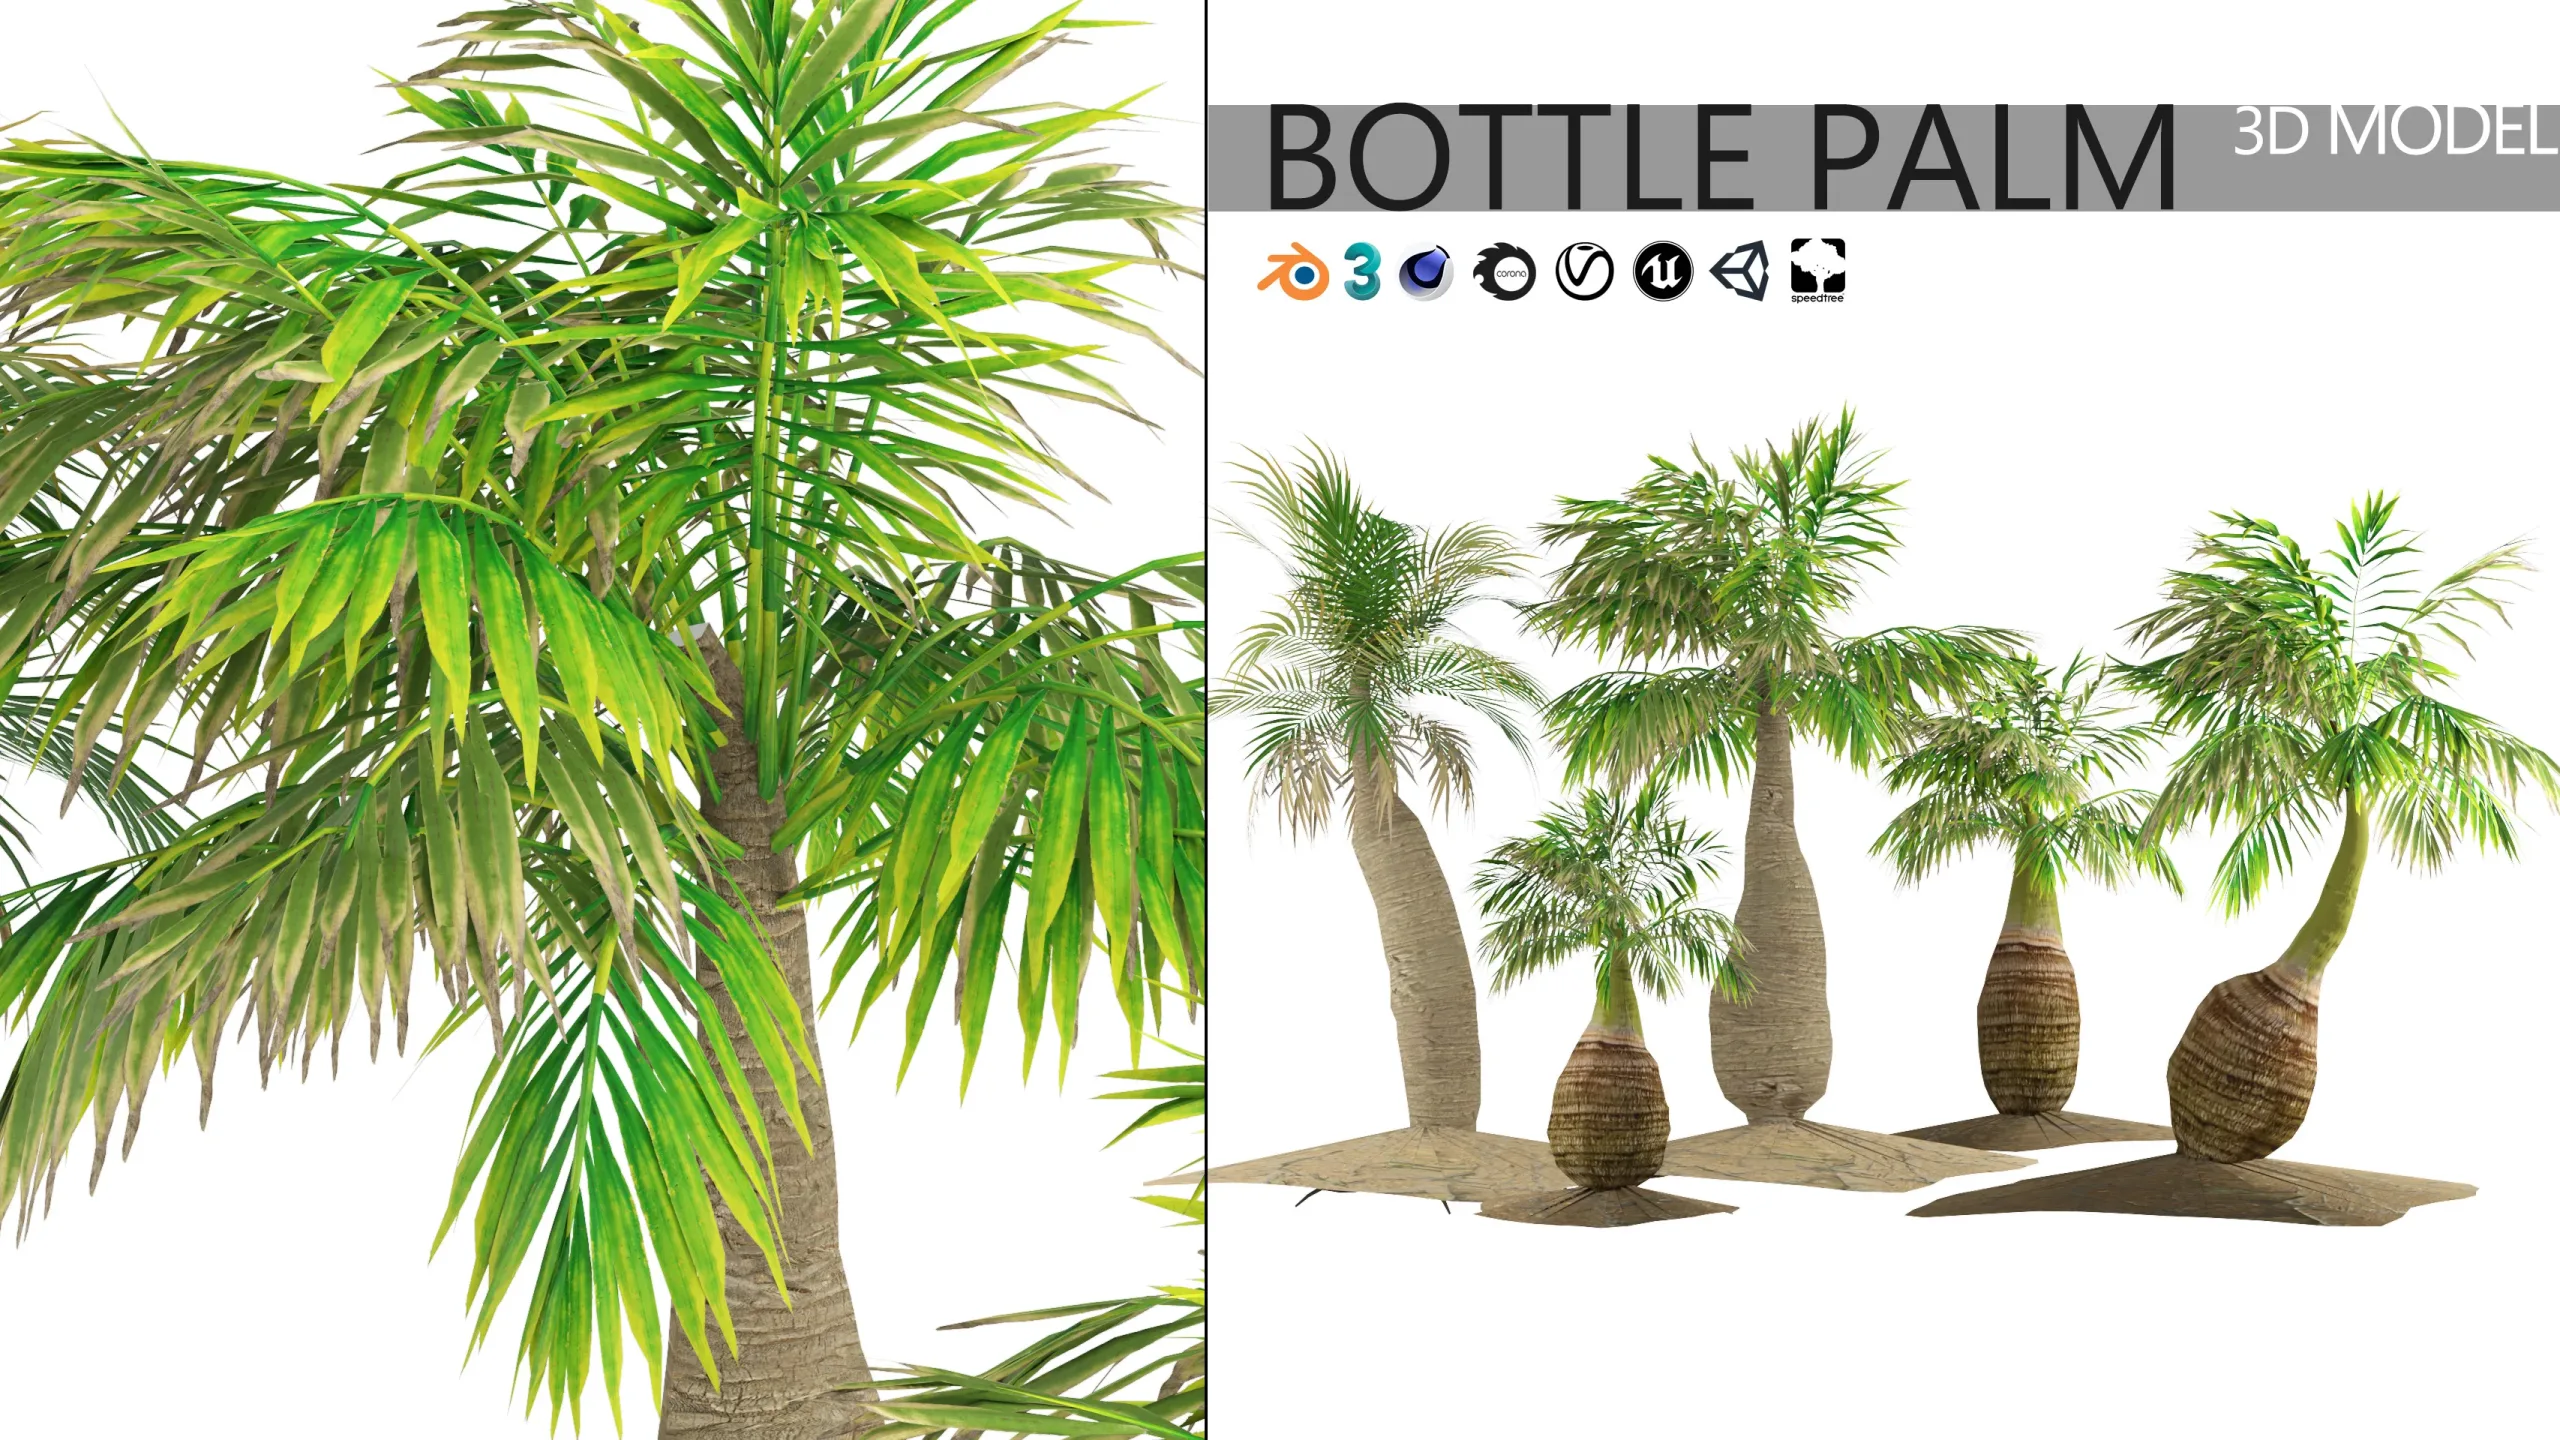 bottle-shaped palm 3d model